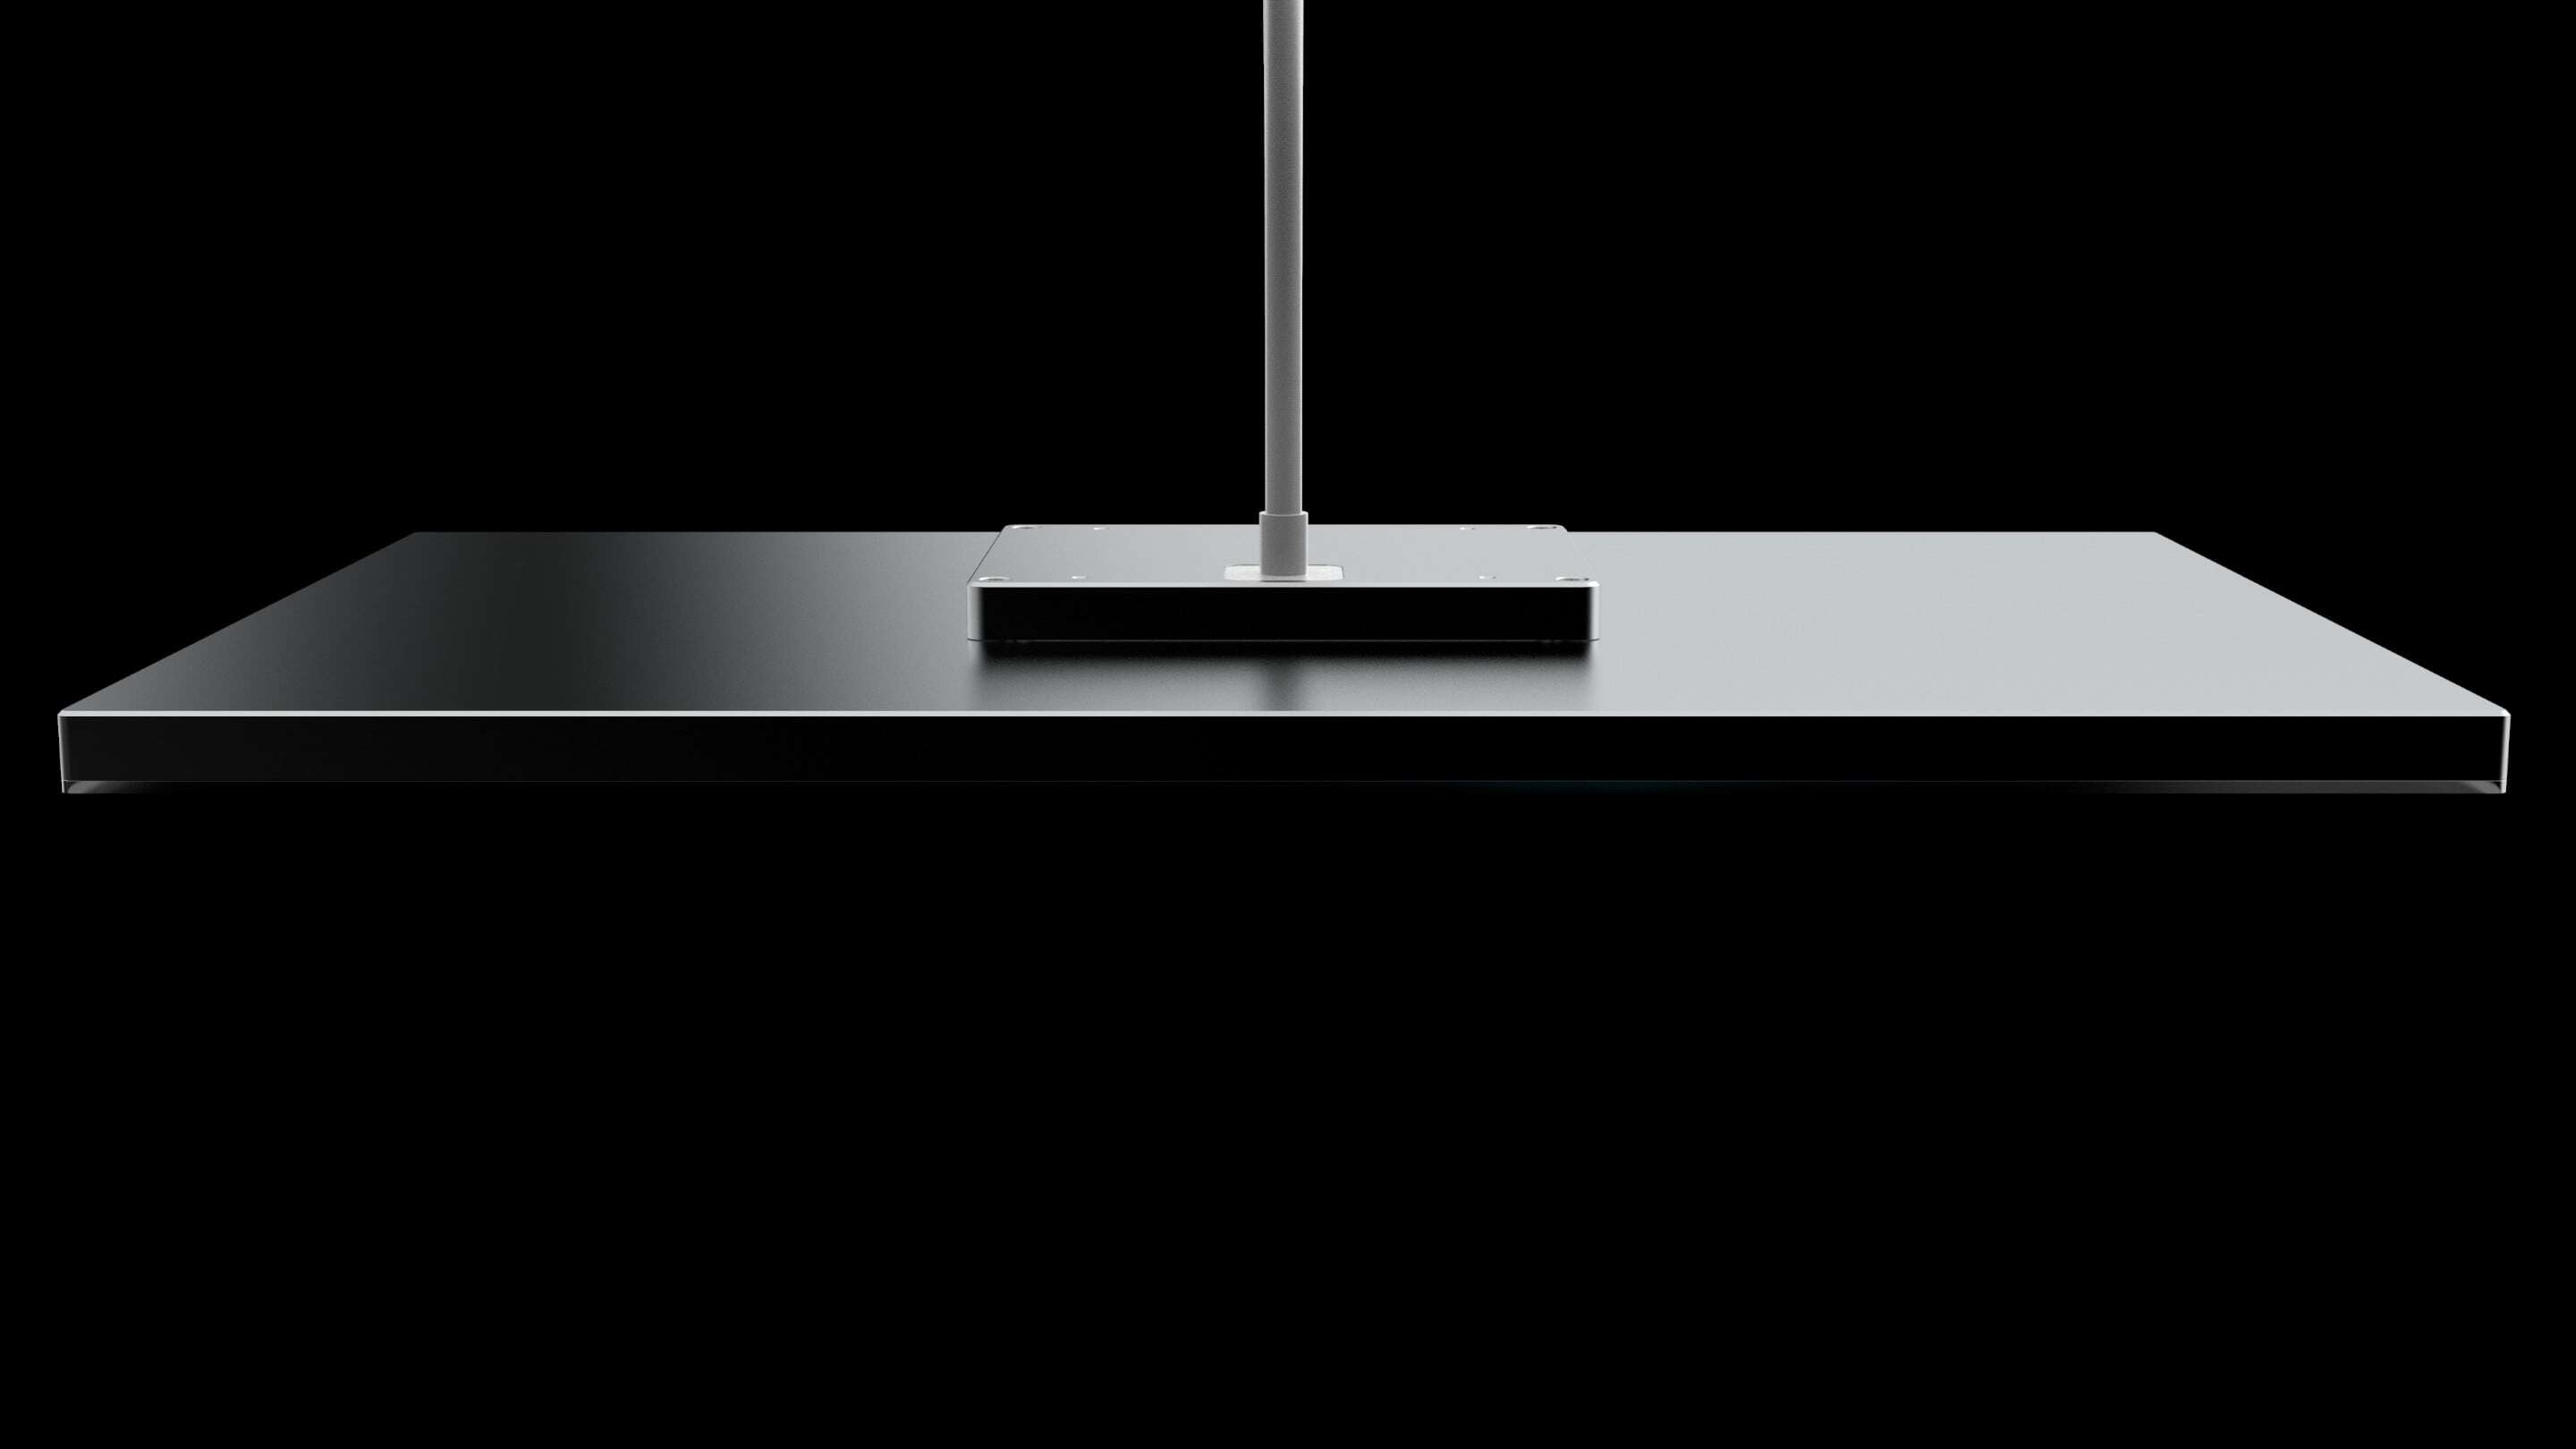 Design - Design a cable a black rectangular table with a pole